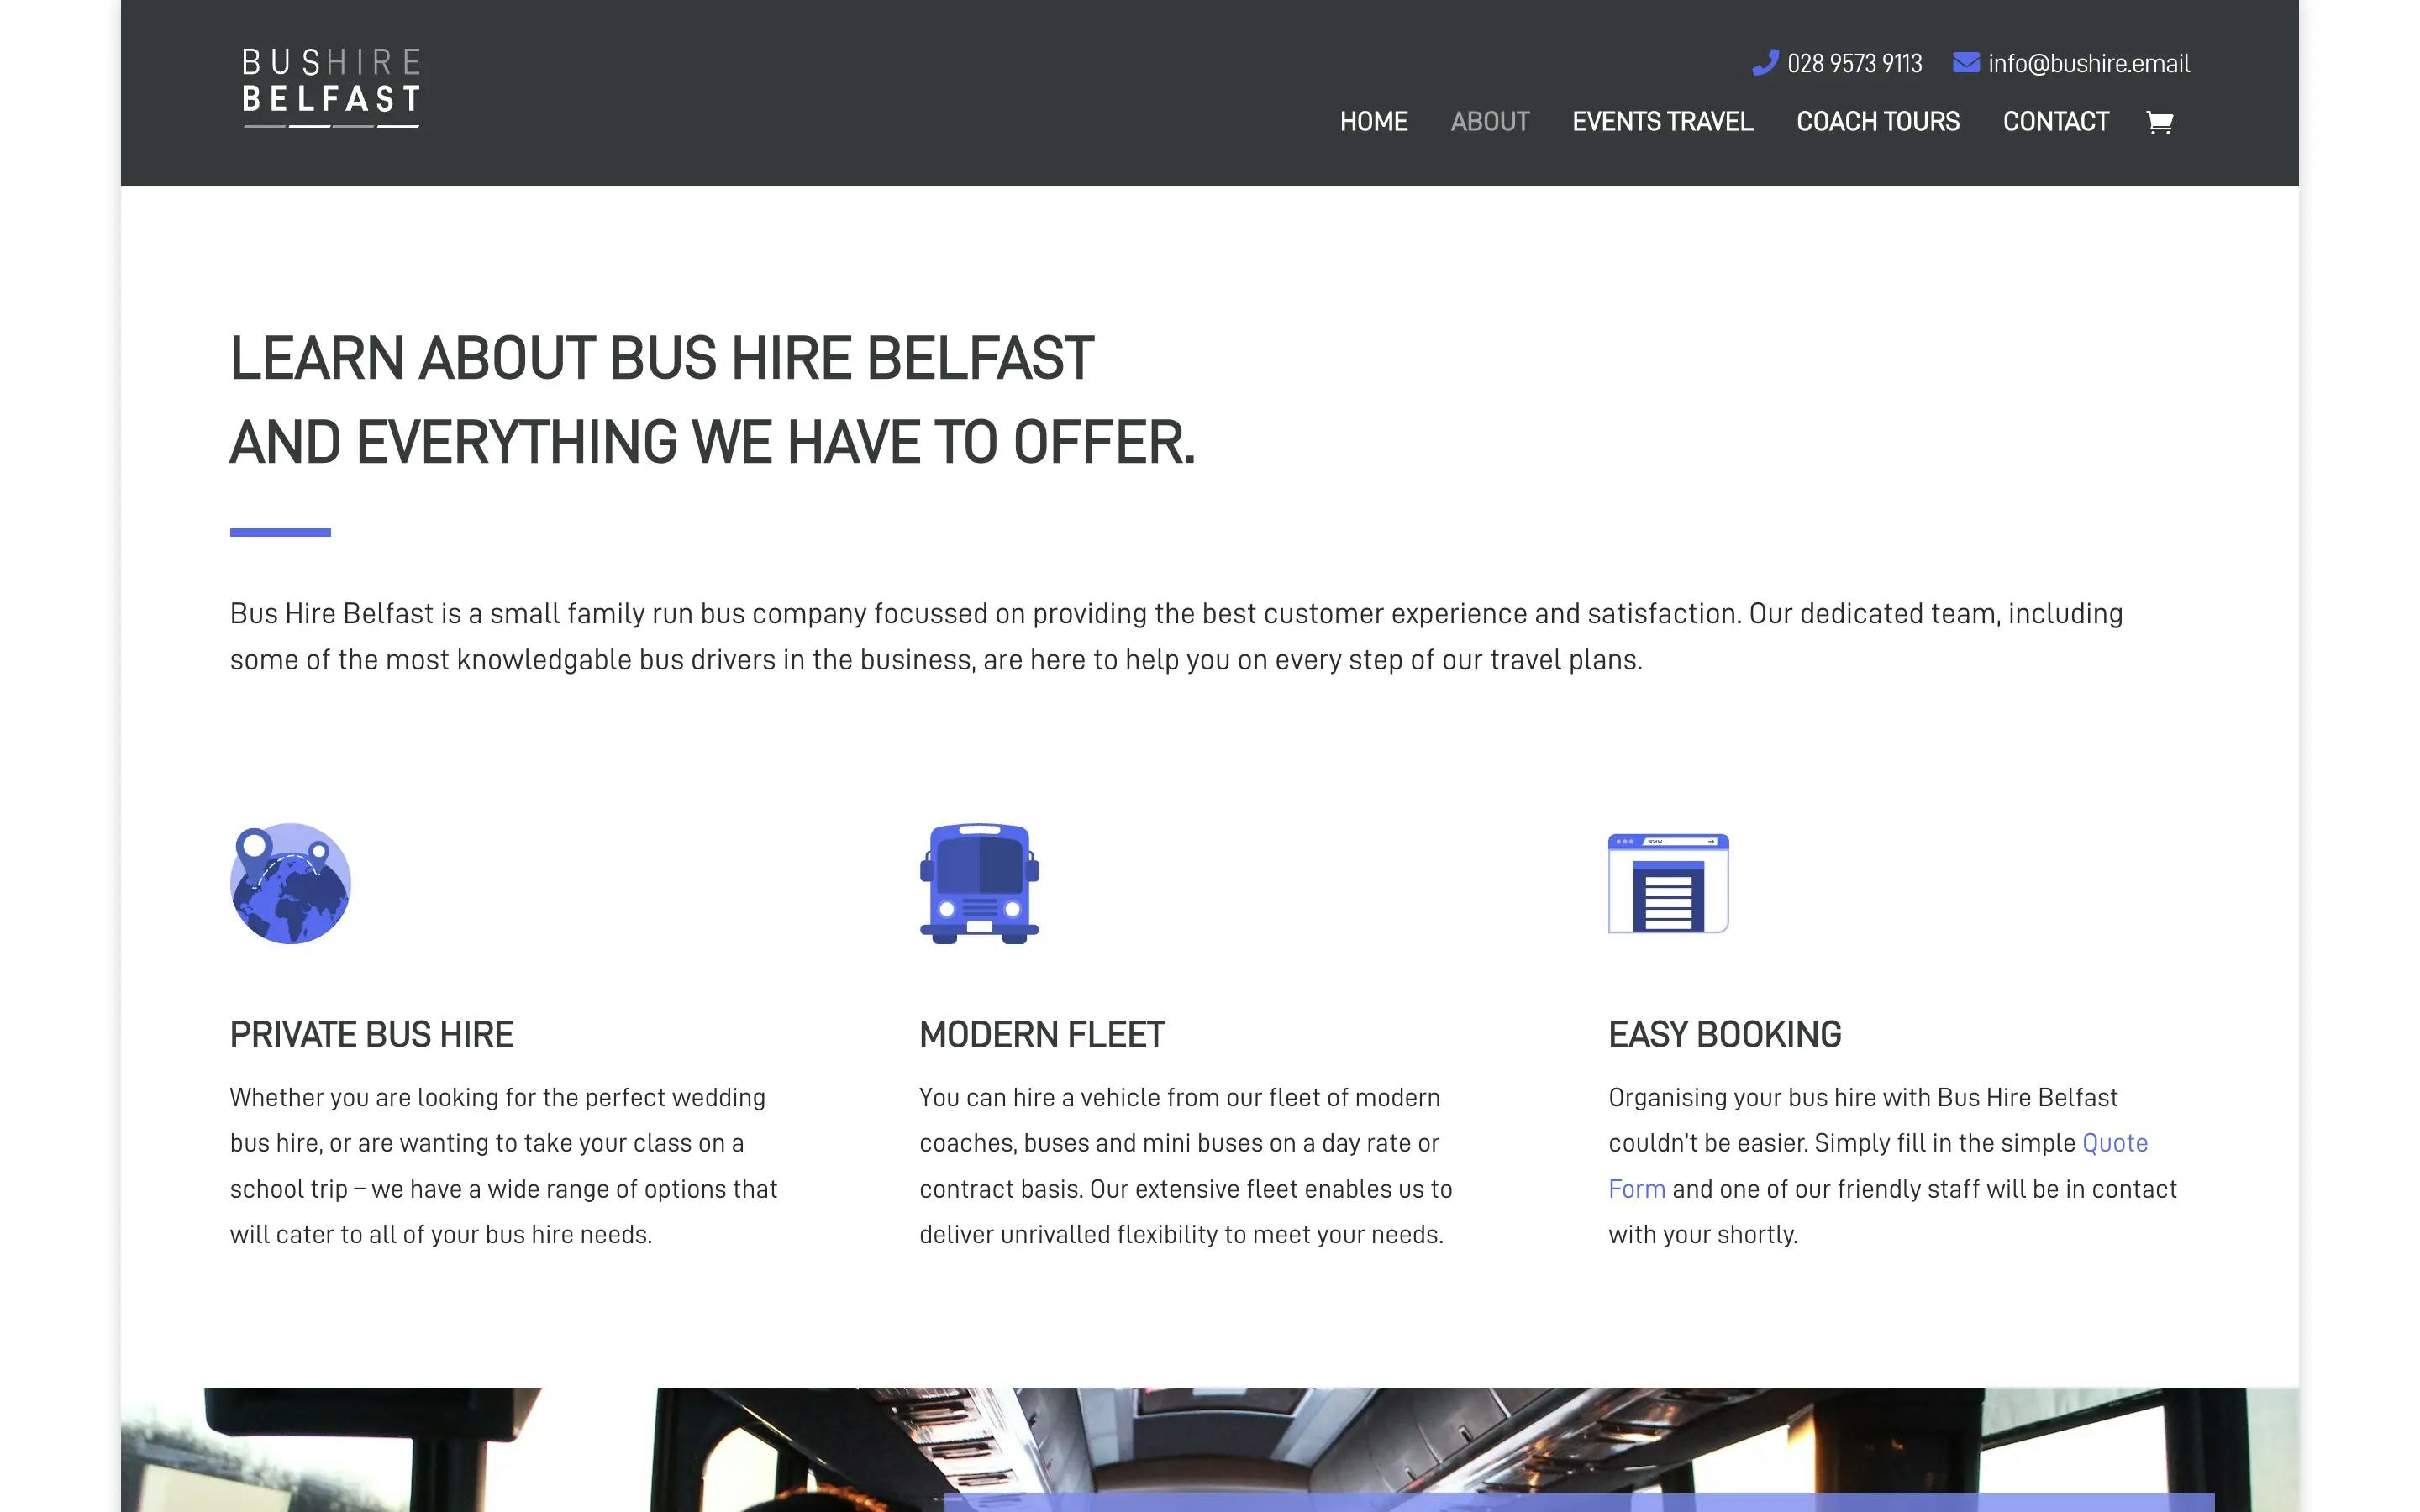 Bus Hire Belfast about page website design on desktop